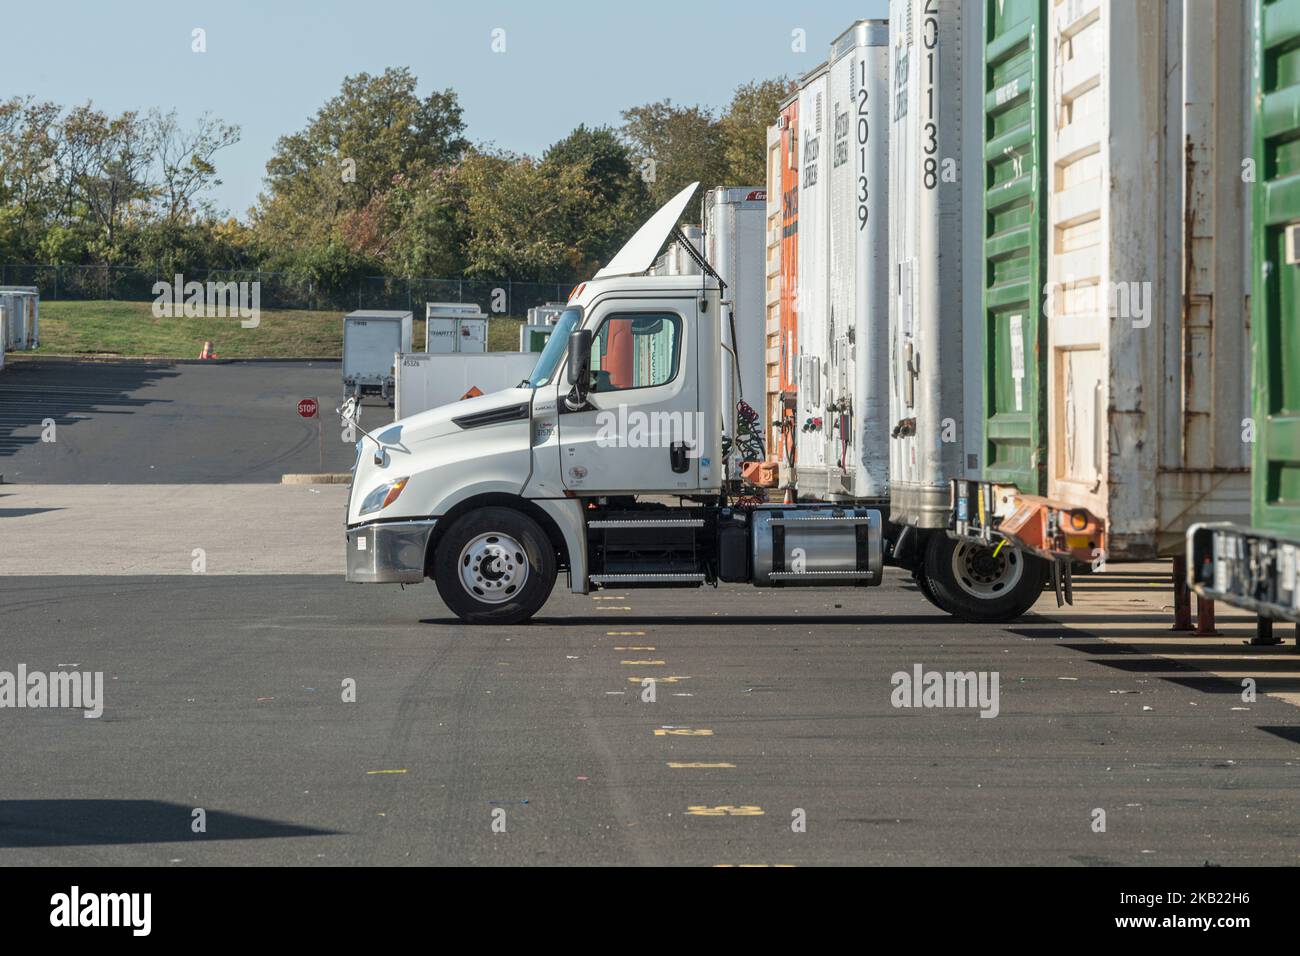 Row of many trucking trailers Stock Photo